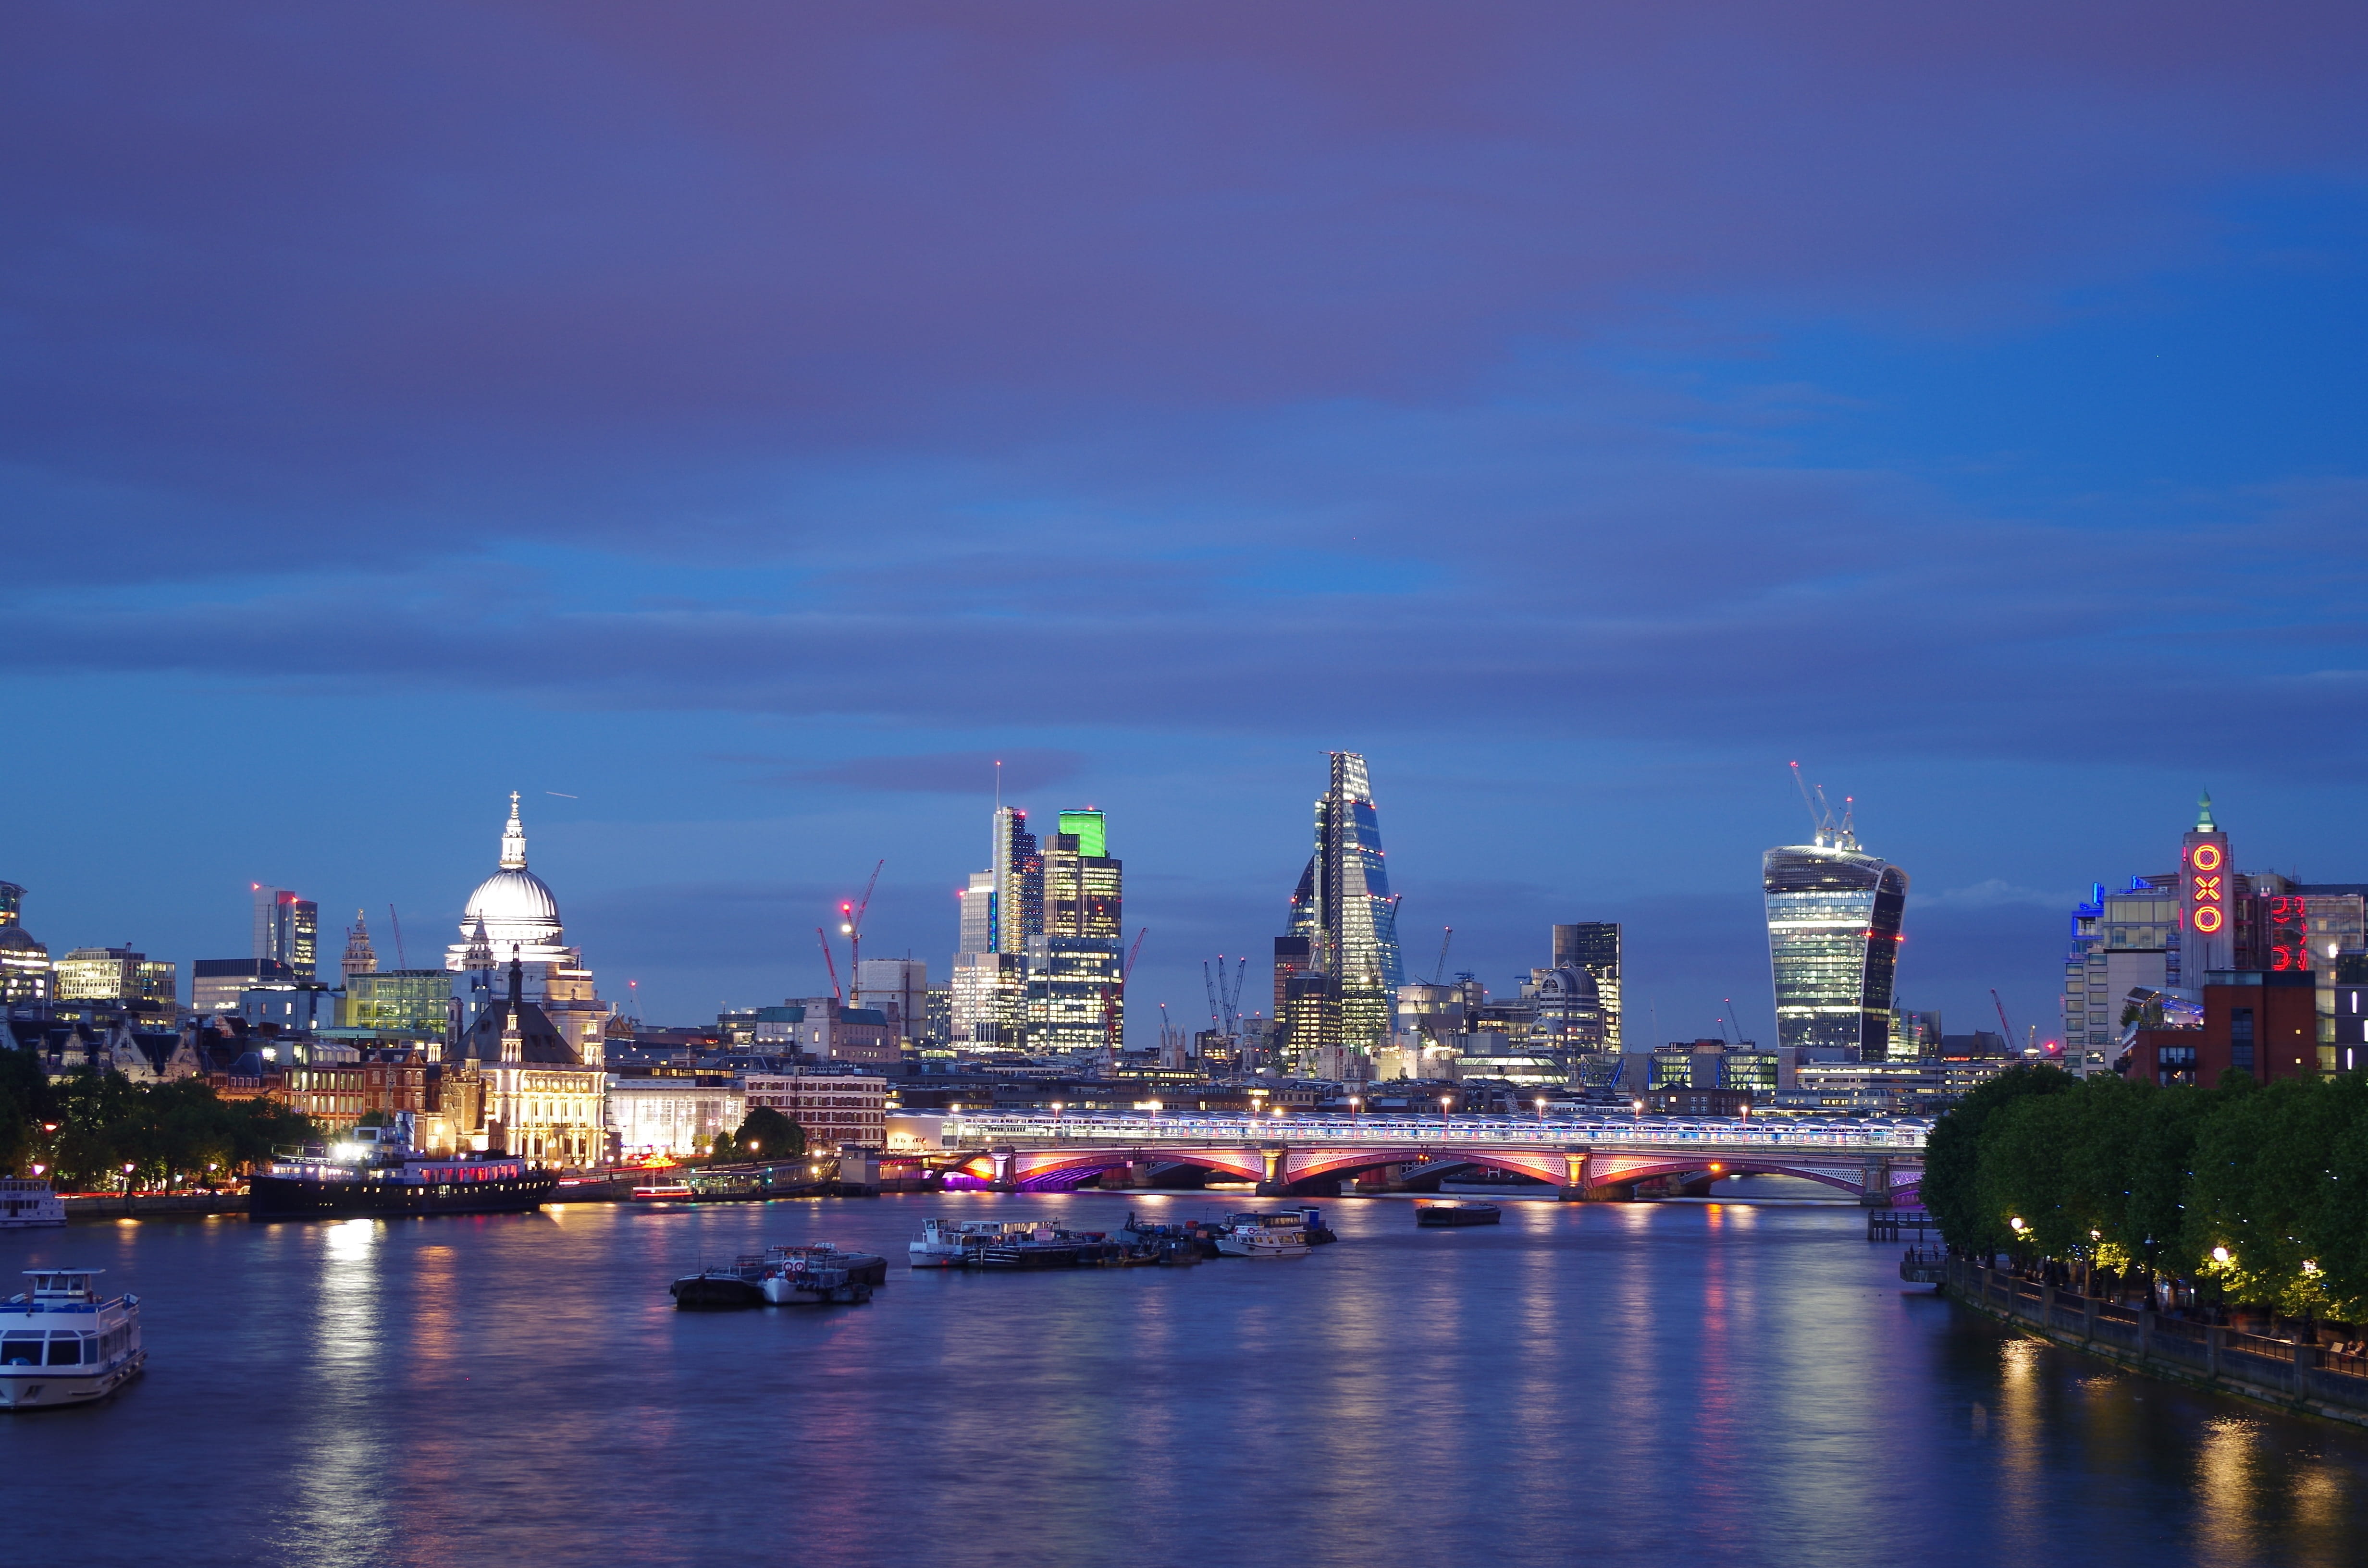 City Of London, London By Night, waterloo bridge, thames River